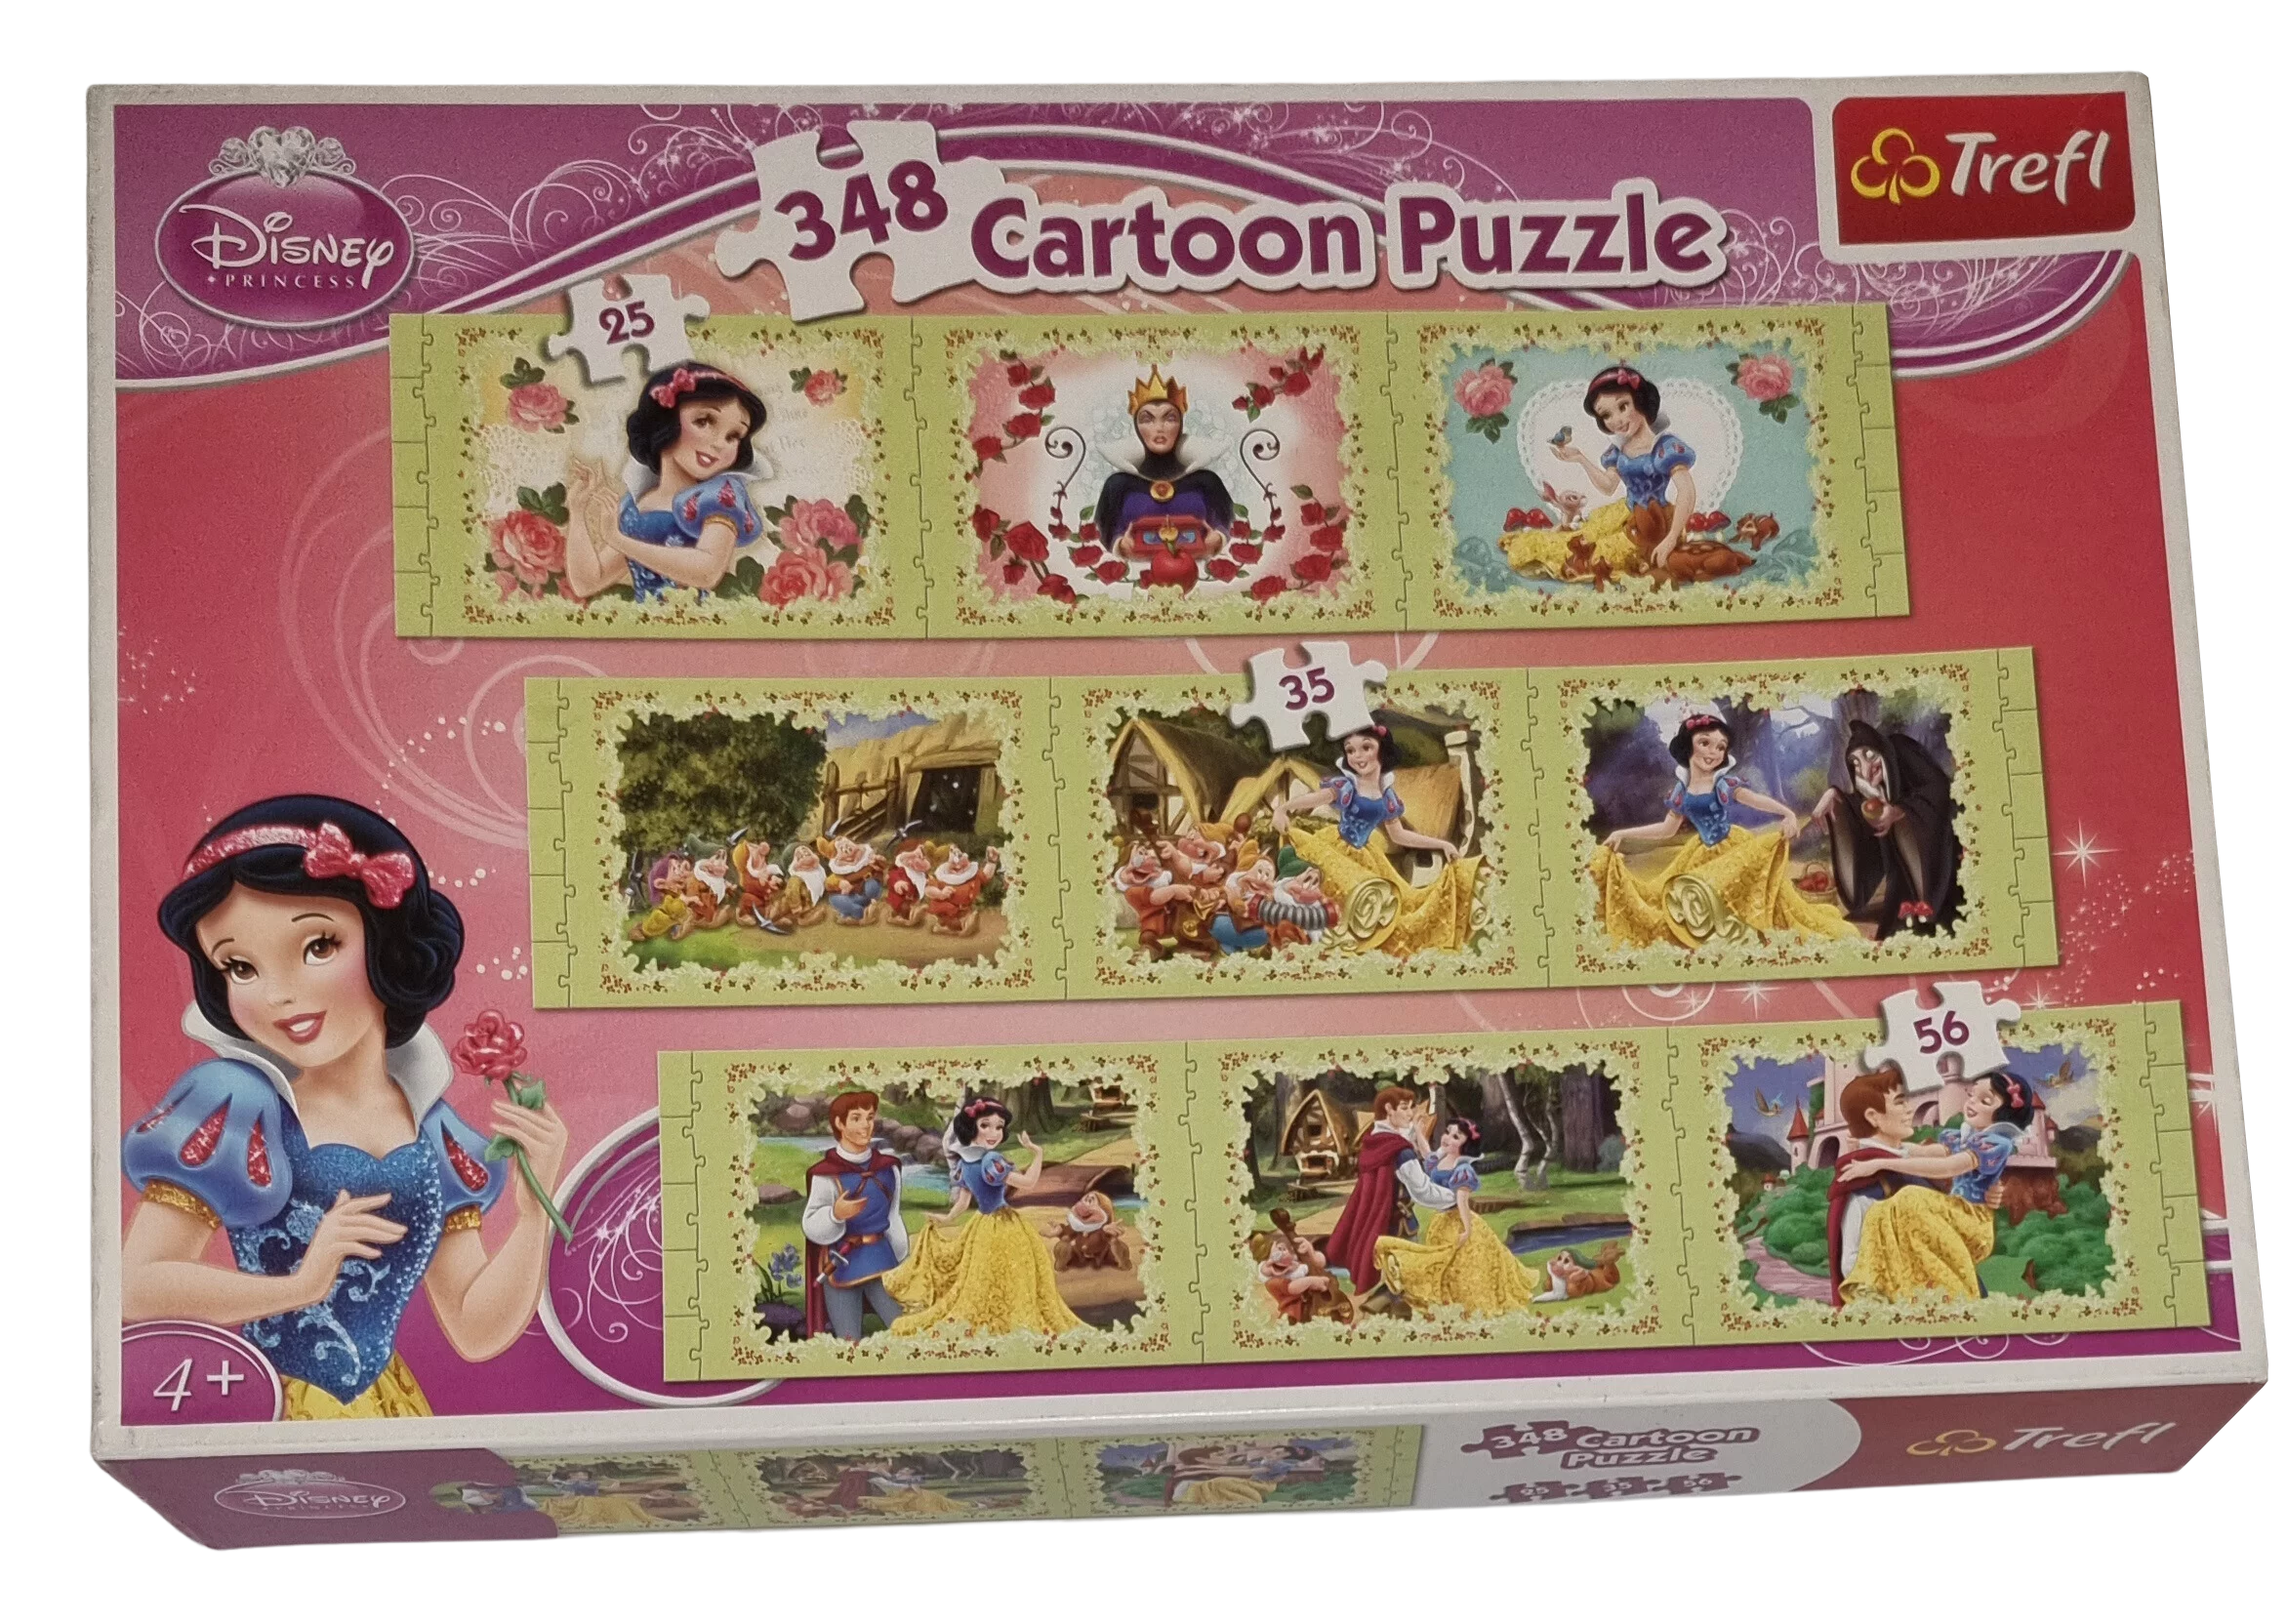 Trefl Disney Princess 348 Cartoon Puzzle 90312 3x25Teile, 3x35Teile, 3x56Teile